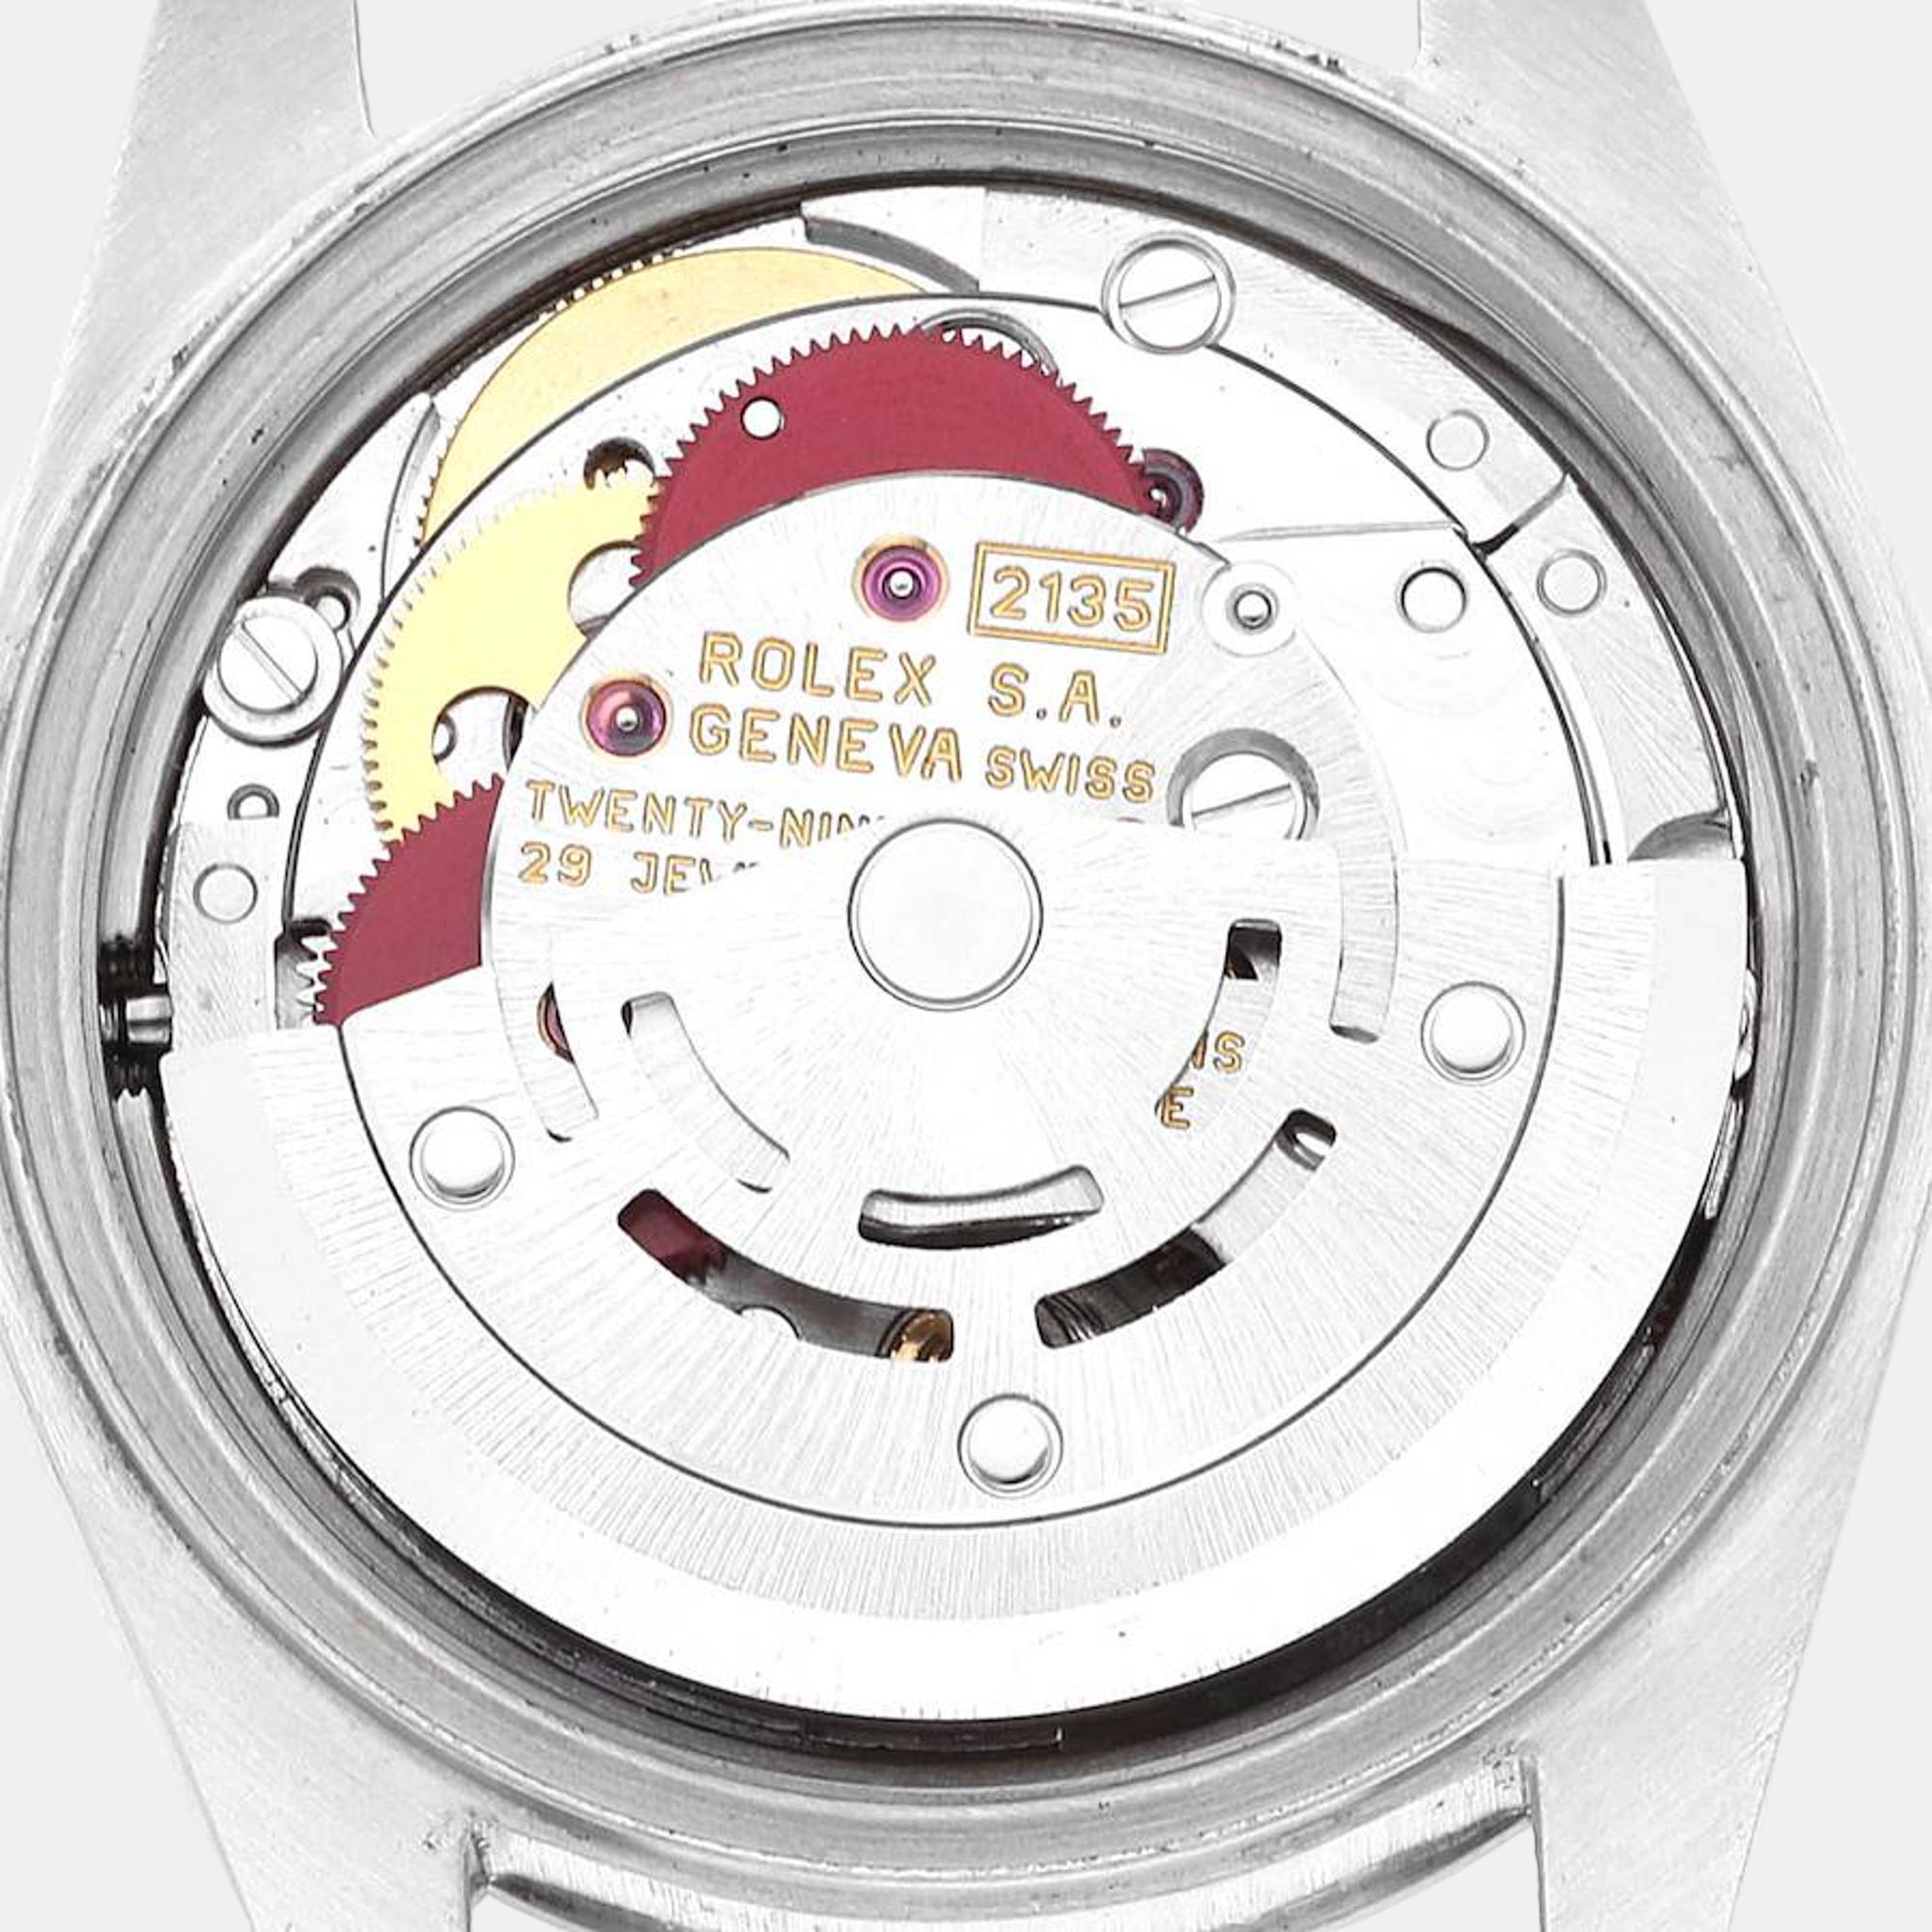 Rolex Datejust Steel White Gold Salmon Dial Ladies Watch 69174